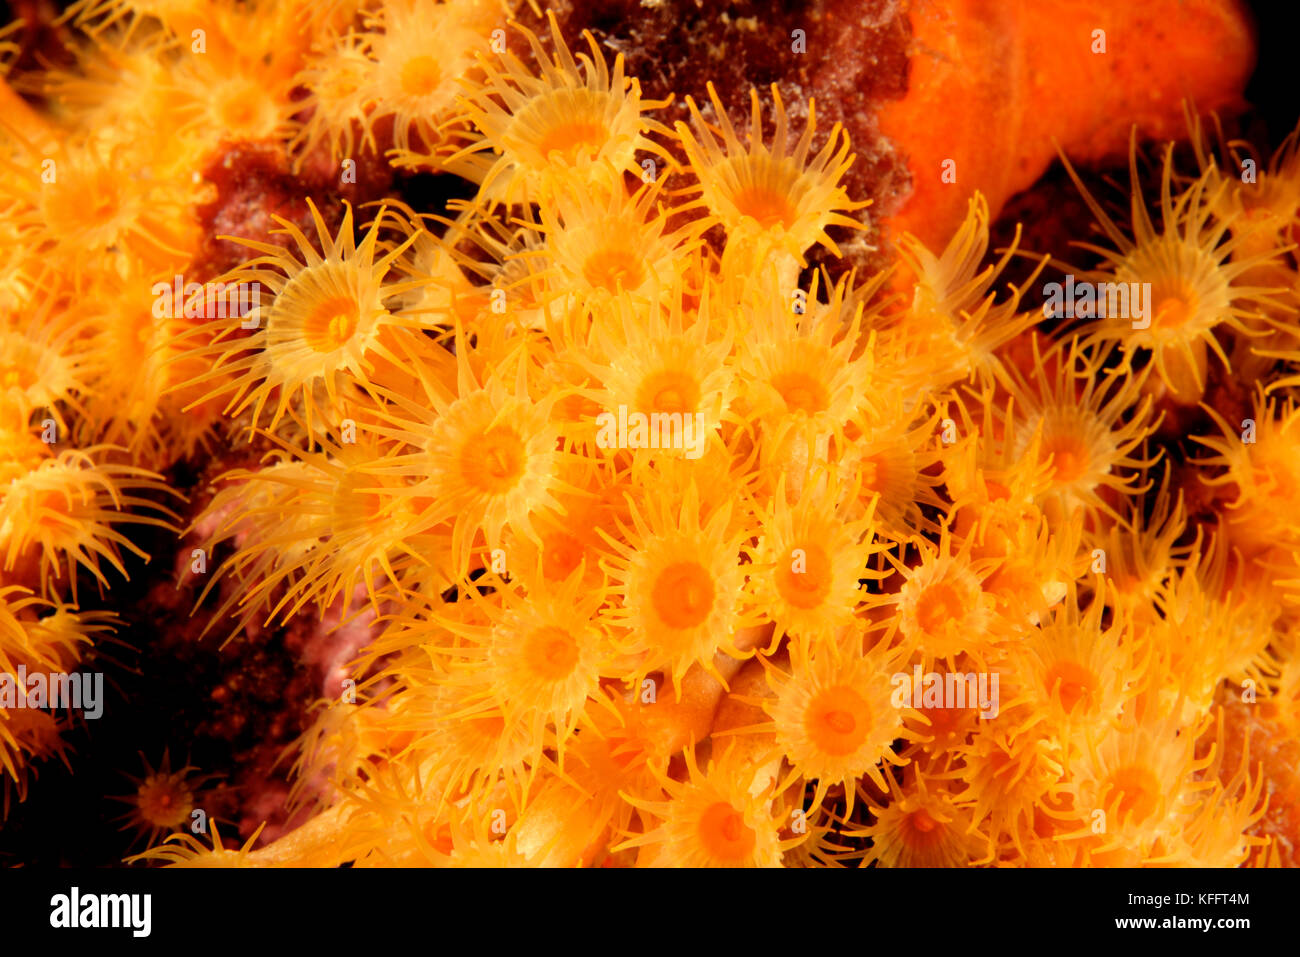 Gelbe inkrustierende Anemone, parazoanthus axinellae, Adria, Mittelmeer, Kornaten, Kroatien Stockfoto